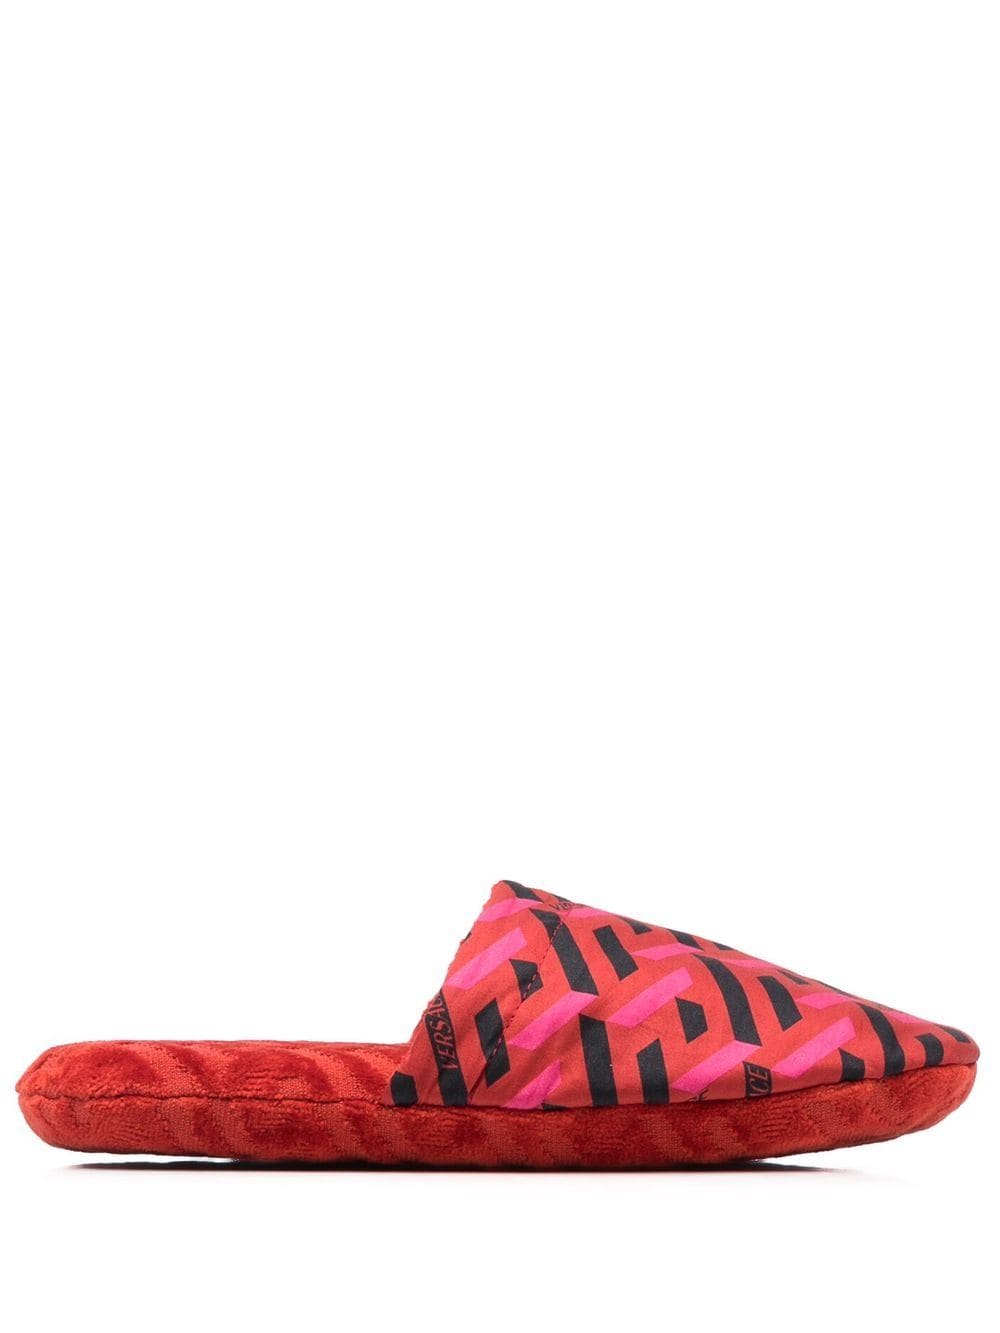 Versace logo monogram slippers - Red